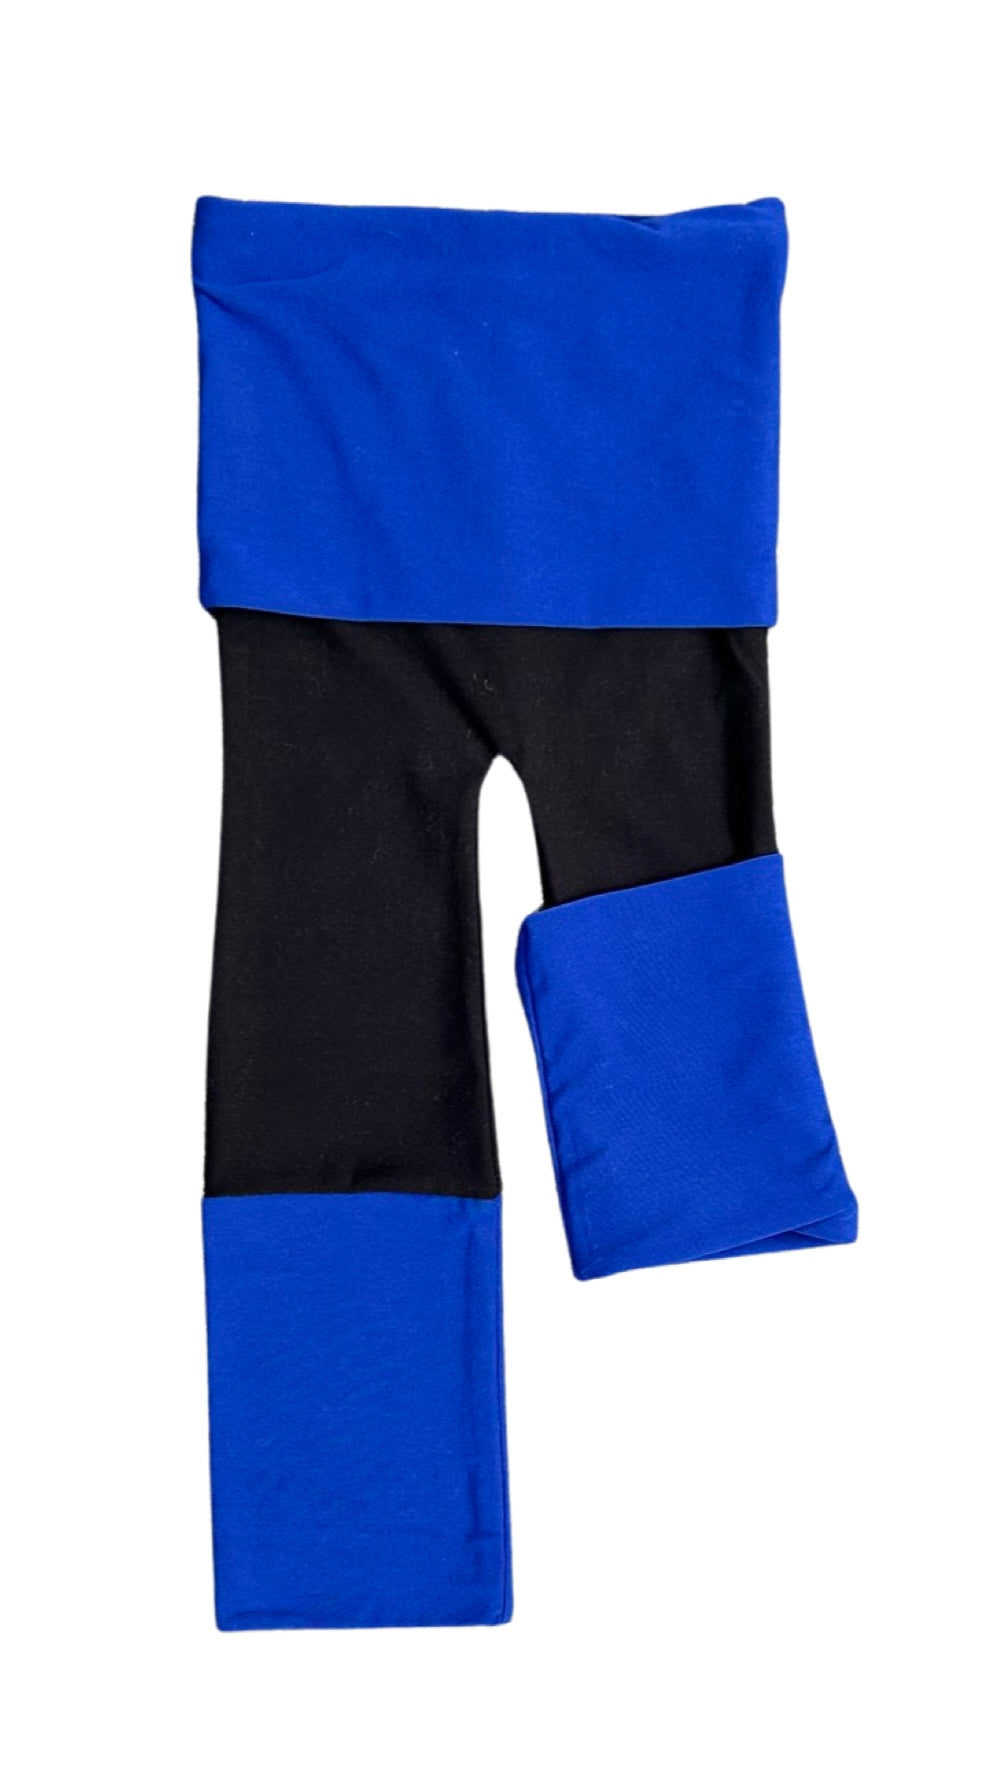 Adjustable Pants - Black with Blue